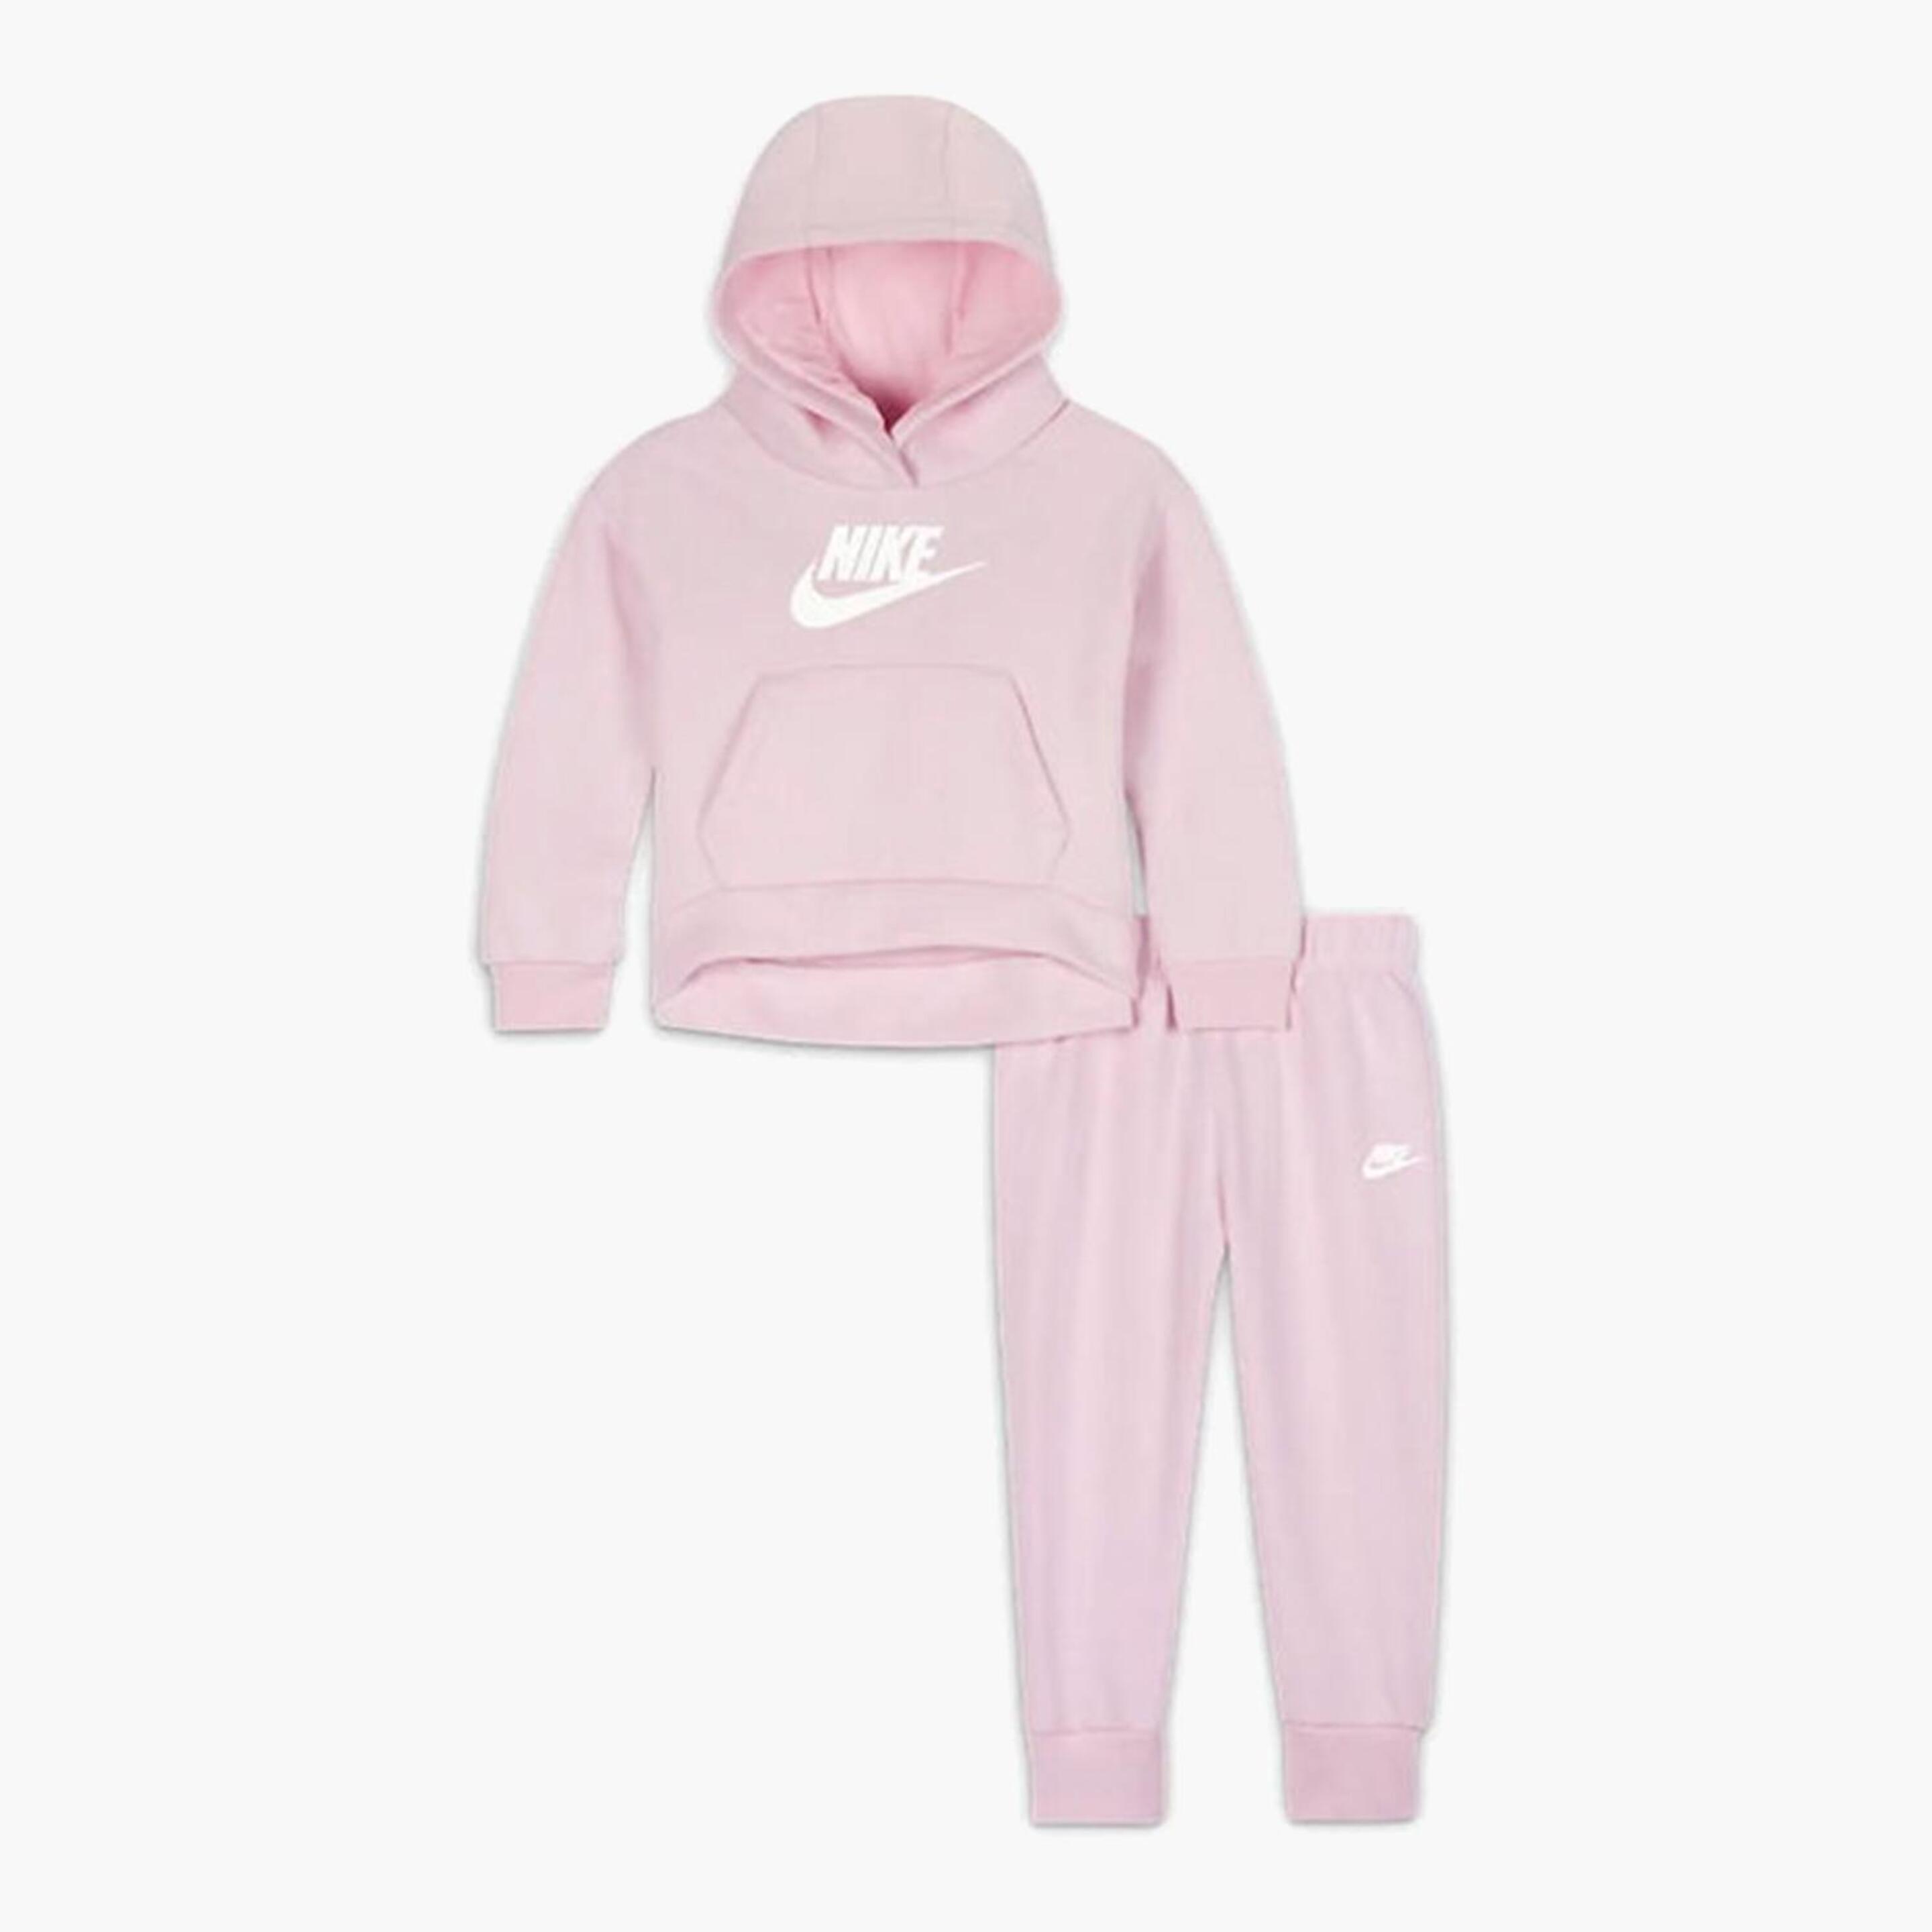 Chándal Nike - rosa - Chándal Bebé